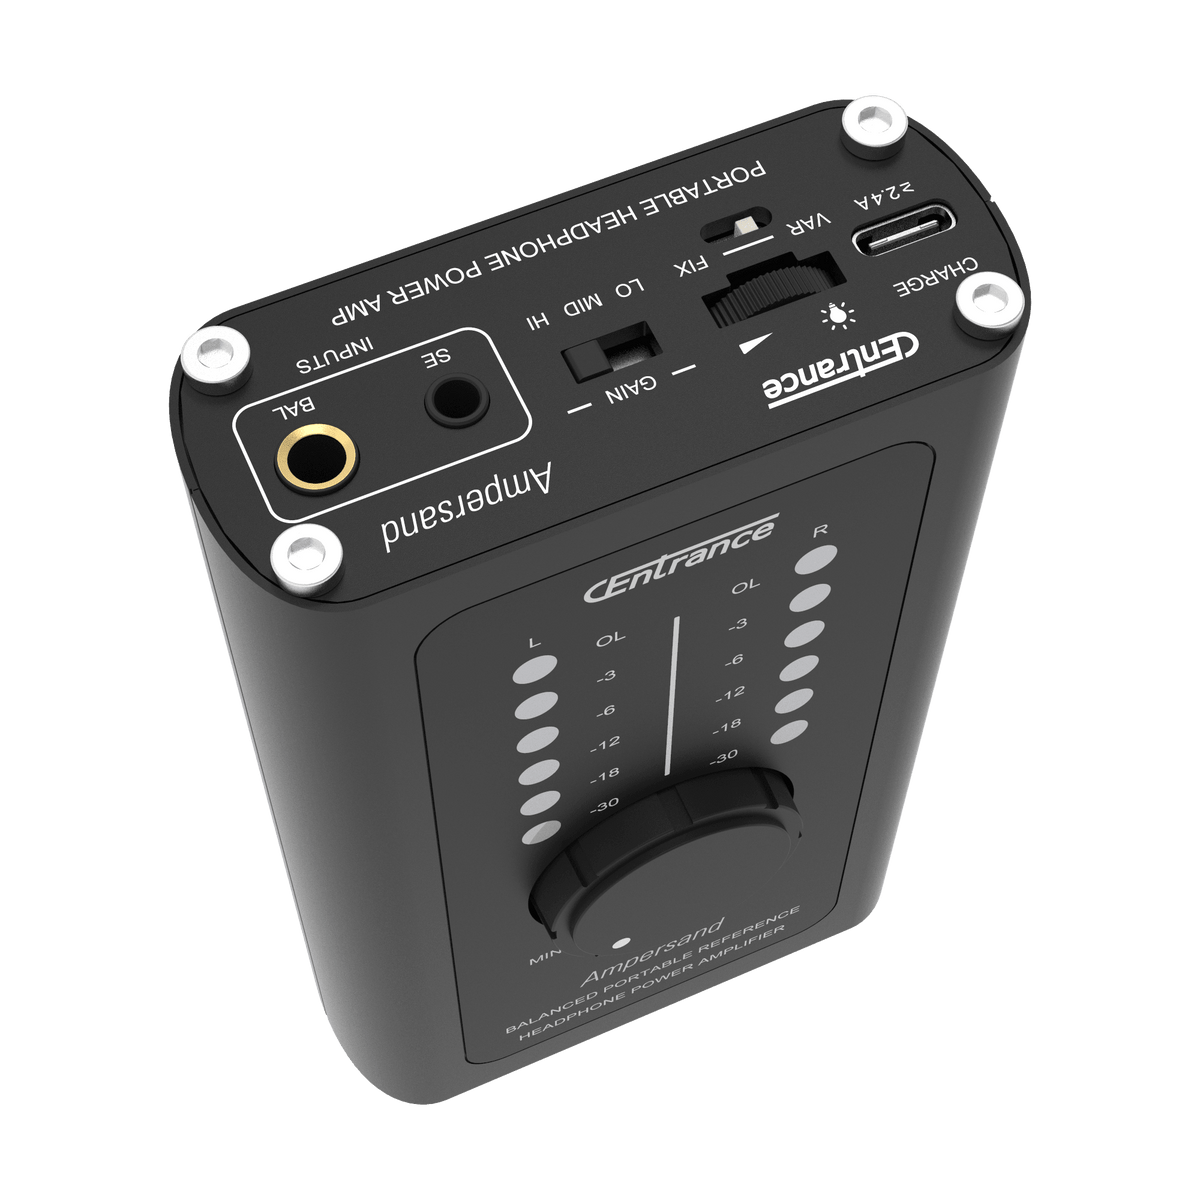 CEntrance Ampersand Portable Headphone Amplifier with 6W of Power - Koala Audio